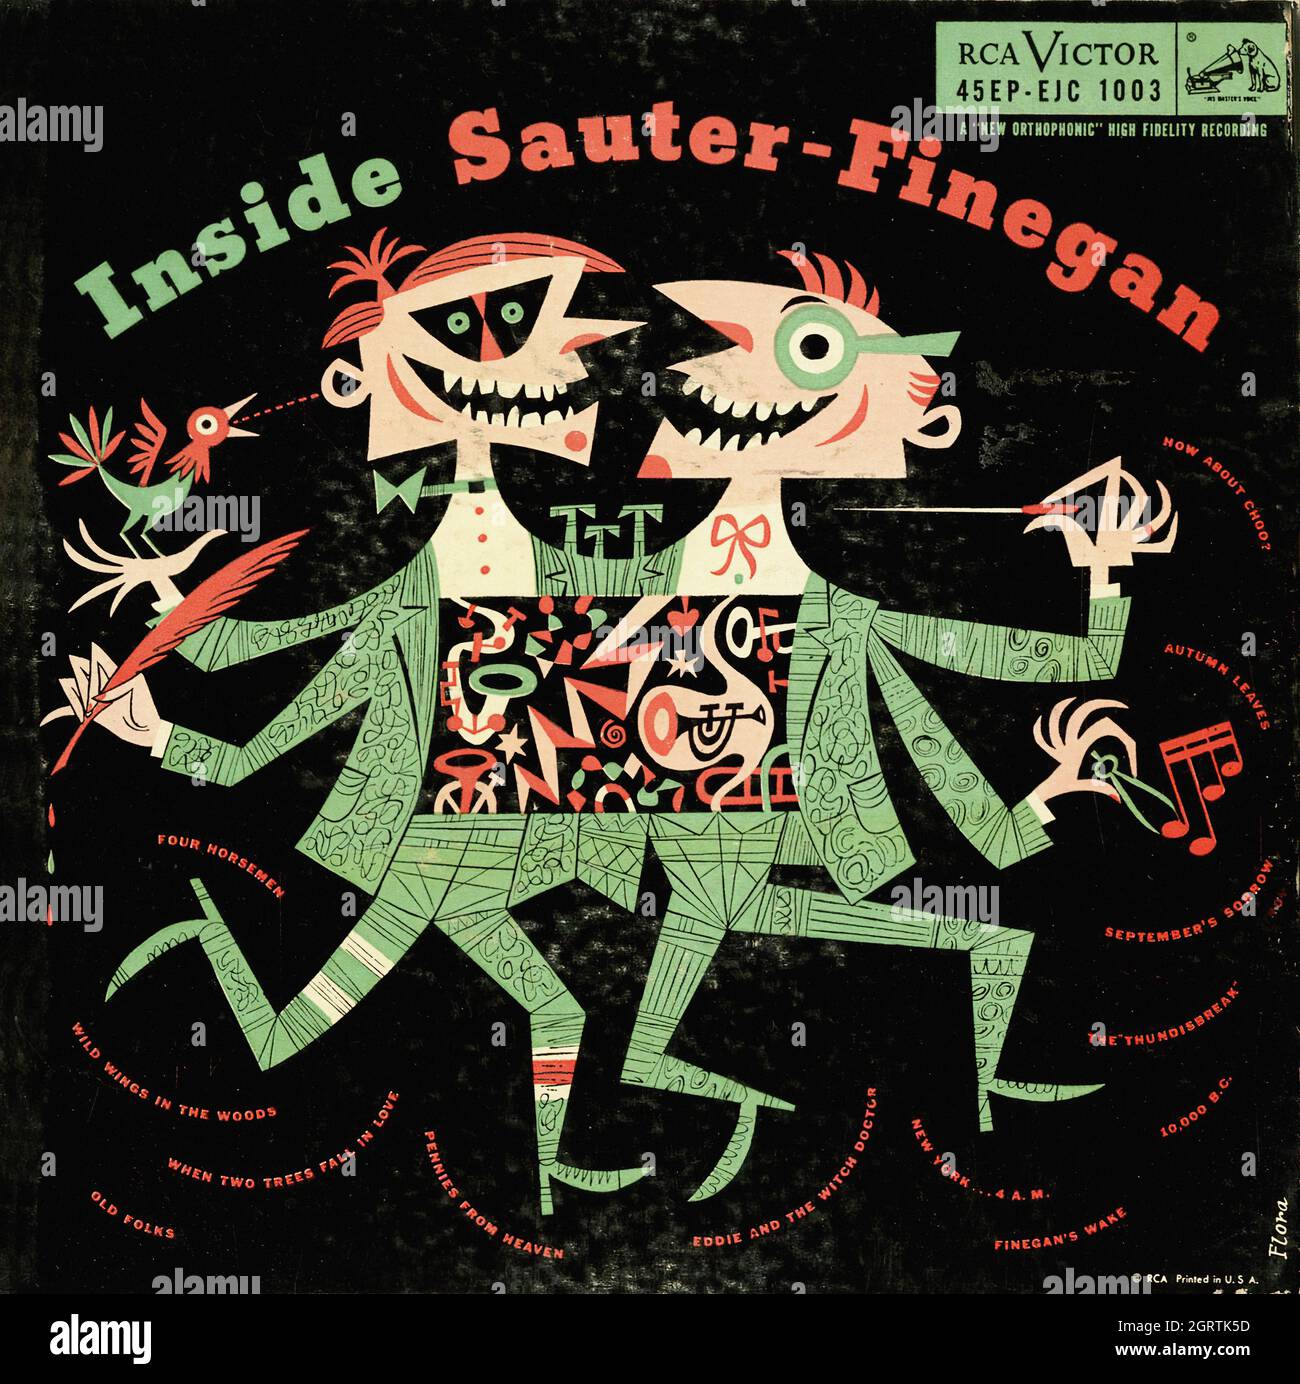 Inside Sauter-Finegan -  Vintage American Comedy Vinyl Album Stock Photo